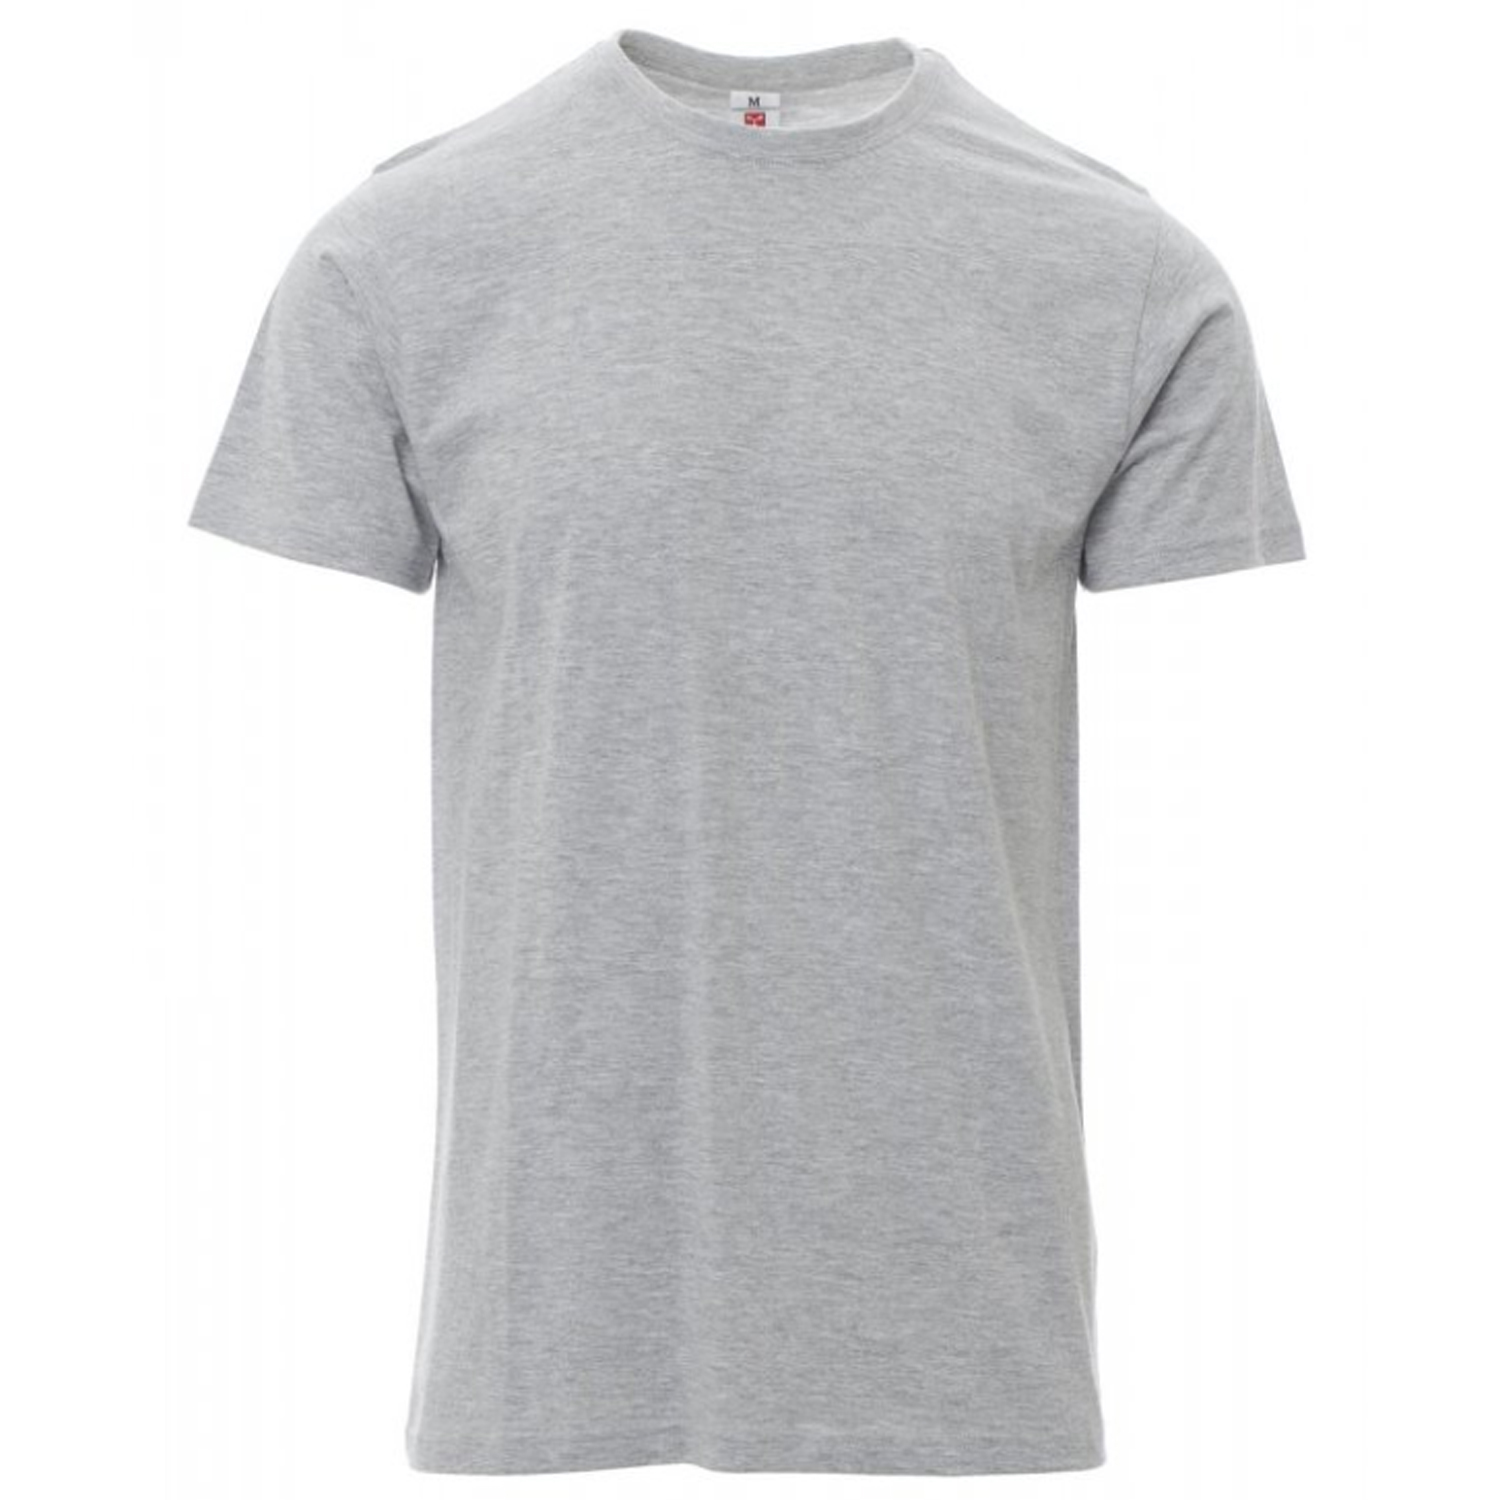 Print T-shirt Melange Grey Size M